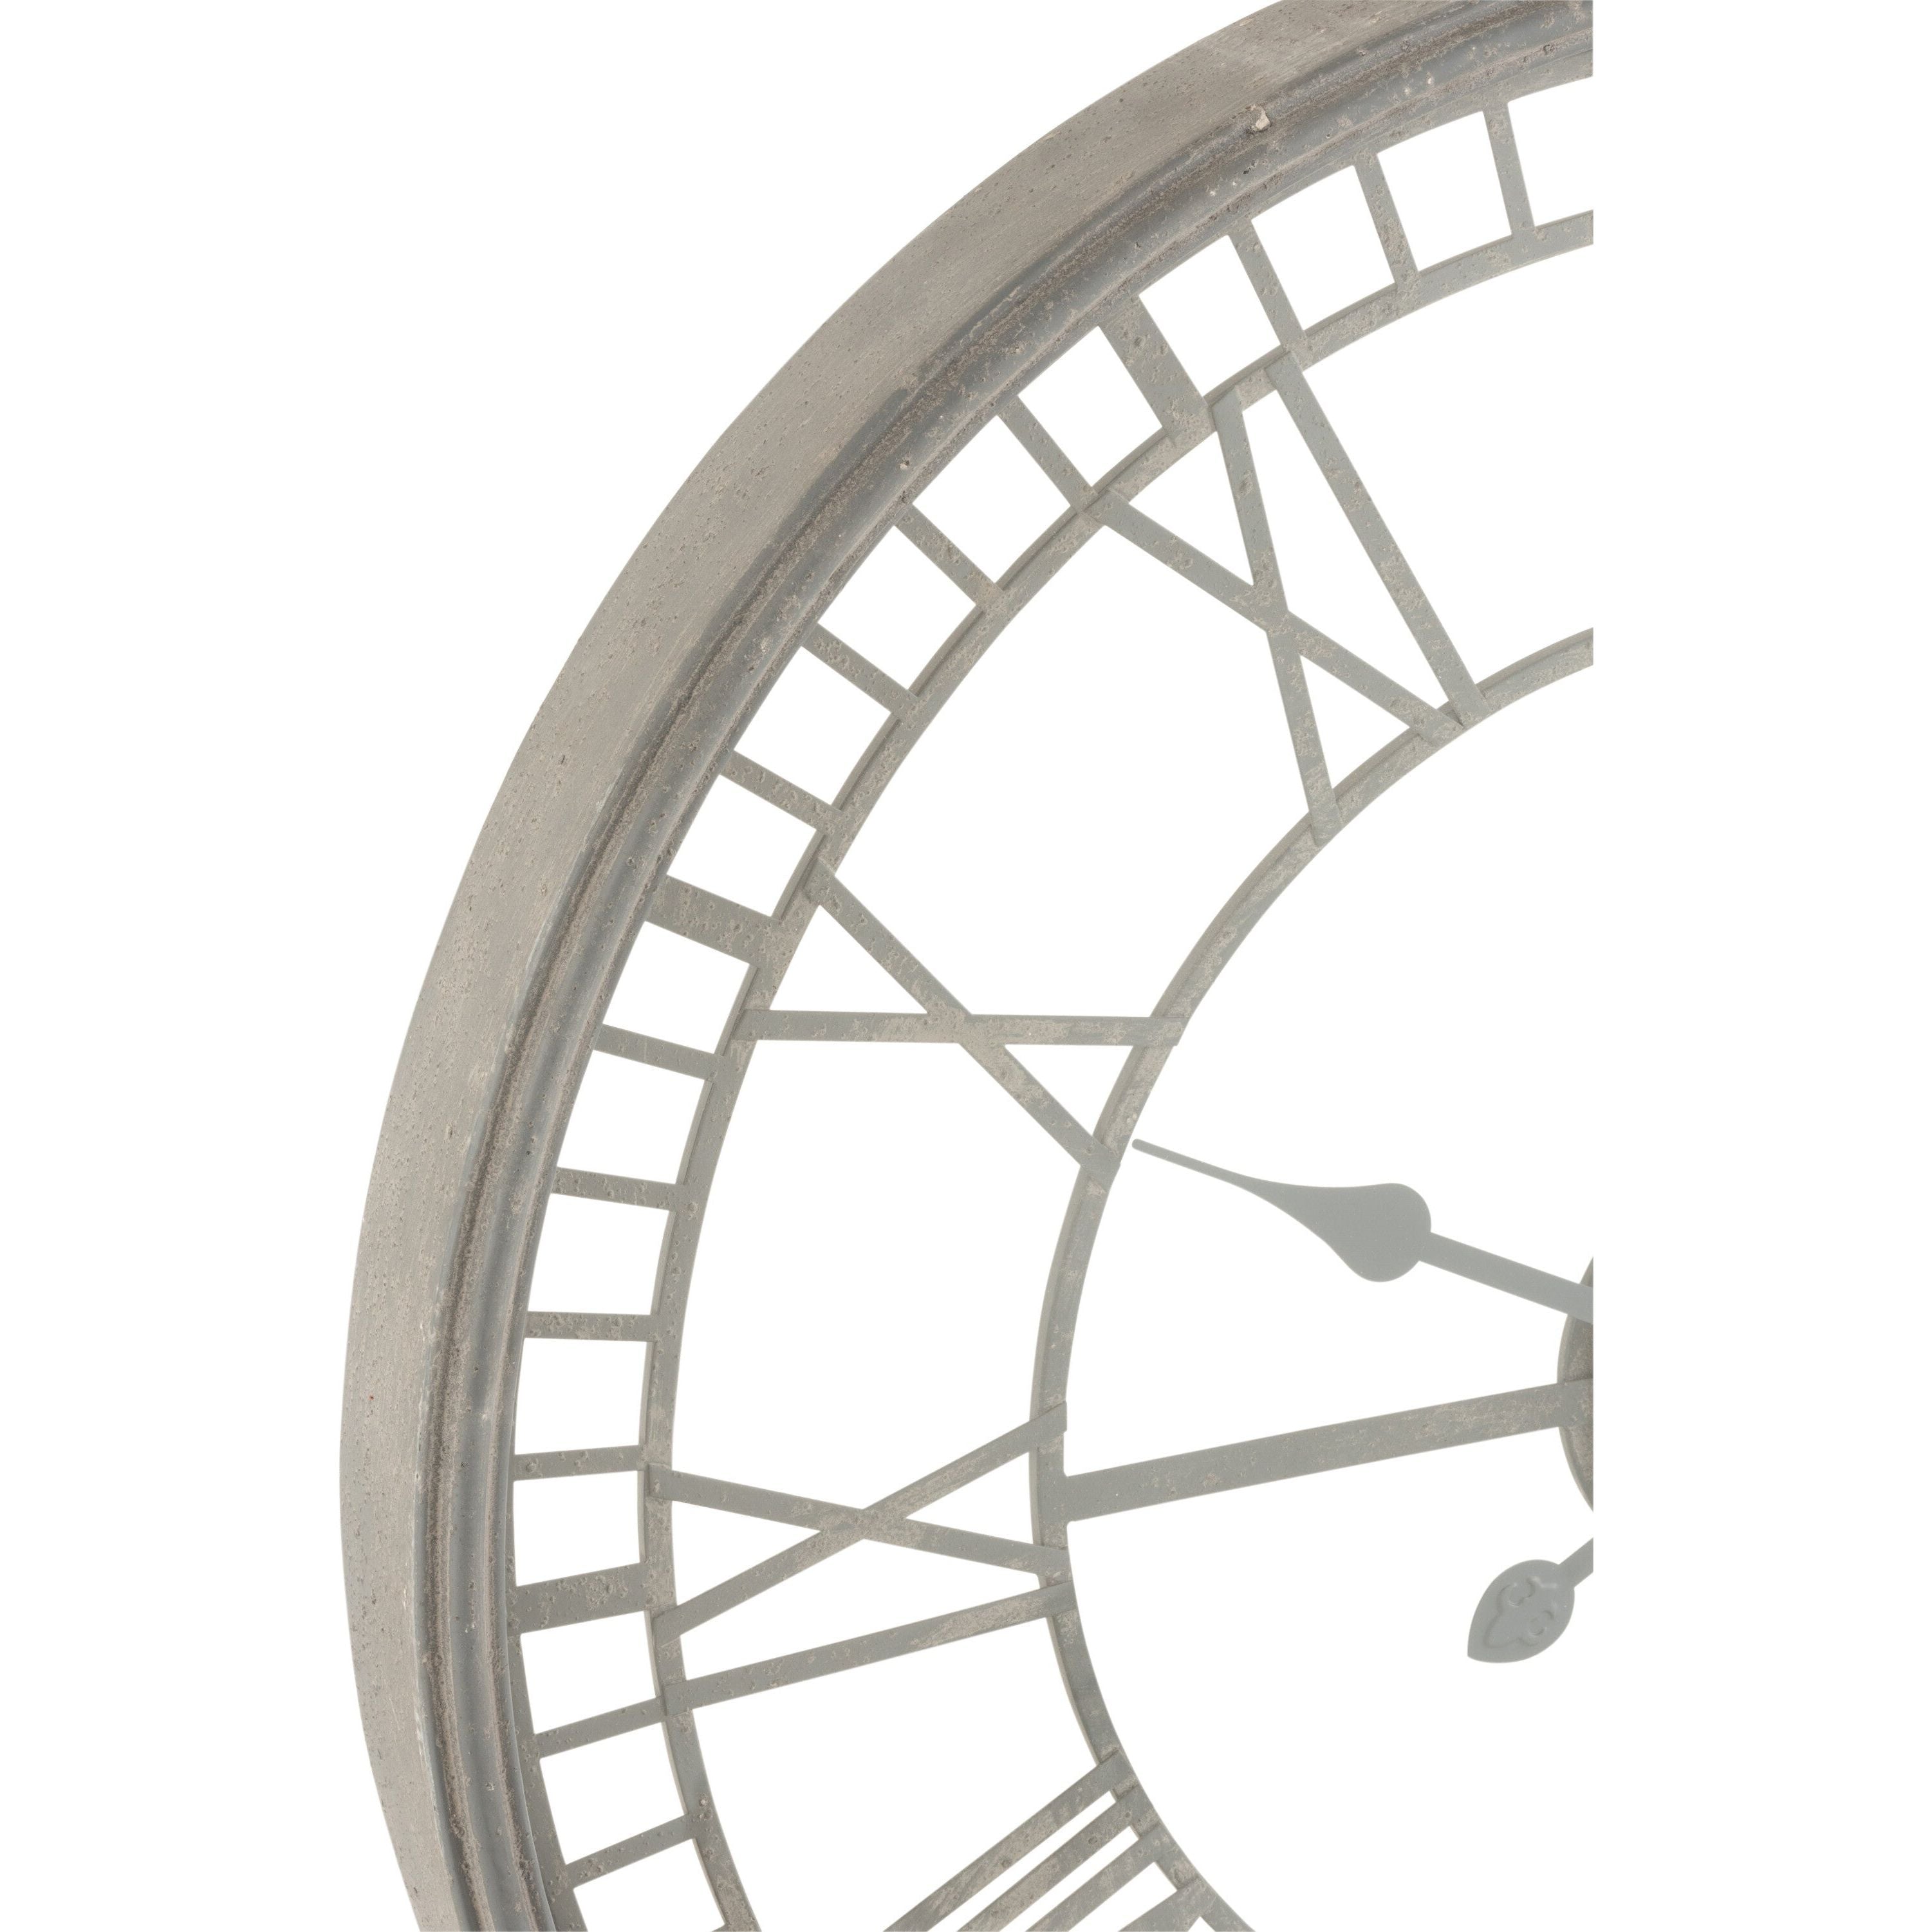 Clock Roman Numerals Metal/Glass Gray